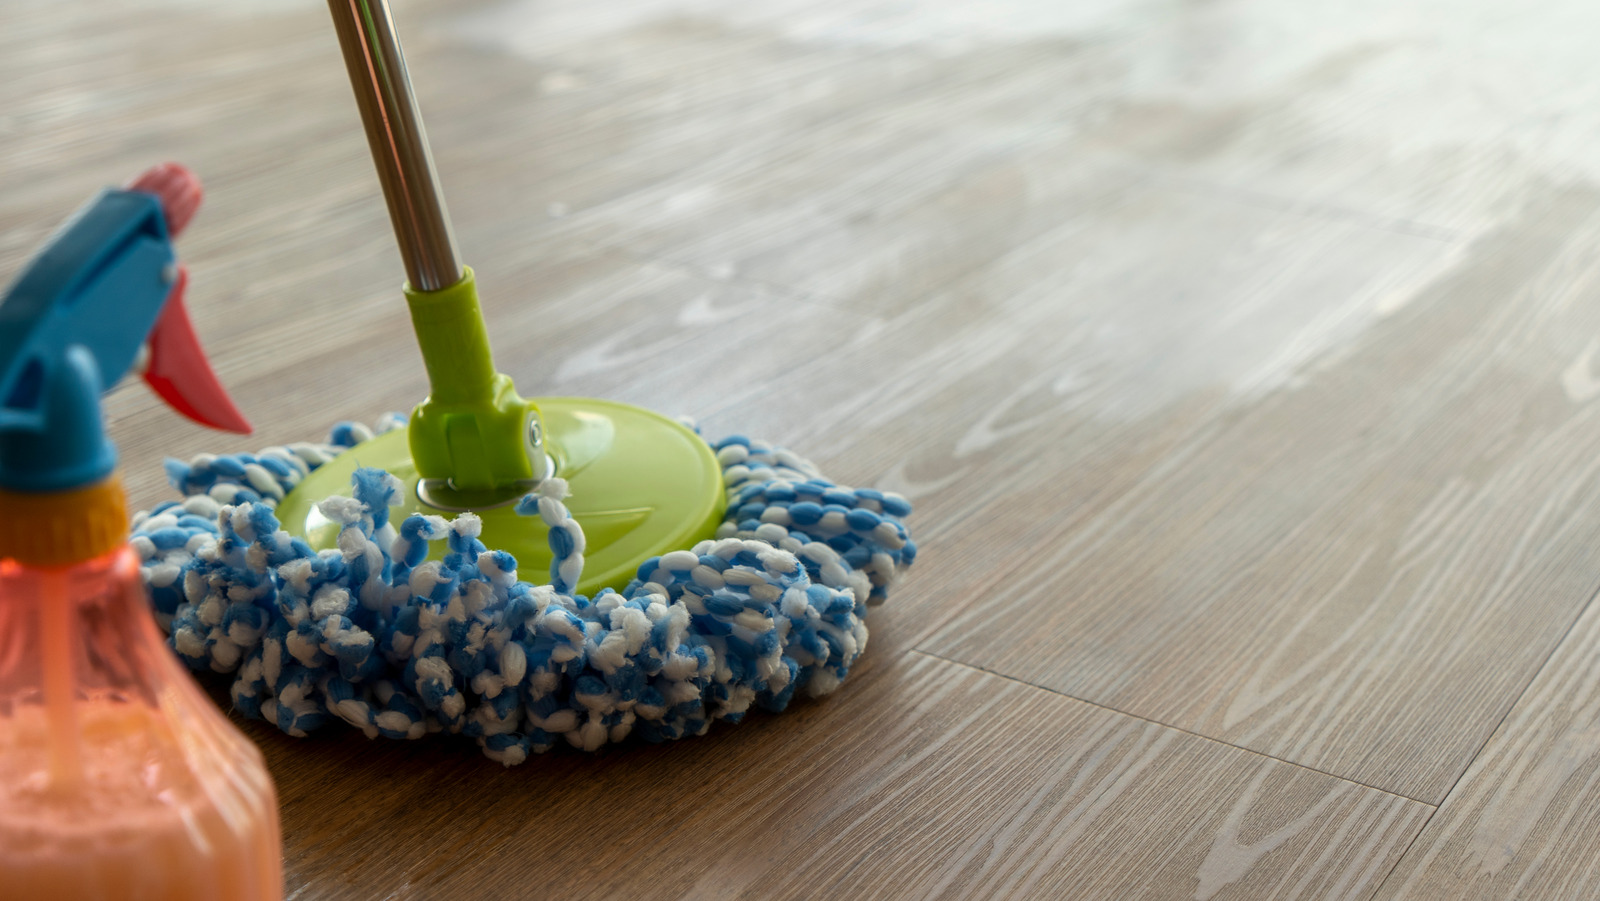 8 Easiest Ways To Clean Vinyl Floors, What To Use Clean Vinyl Tile Floors With Grout